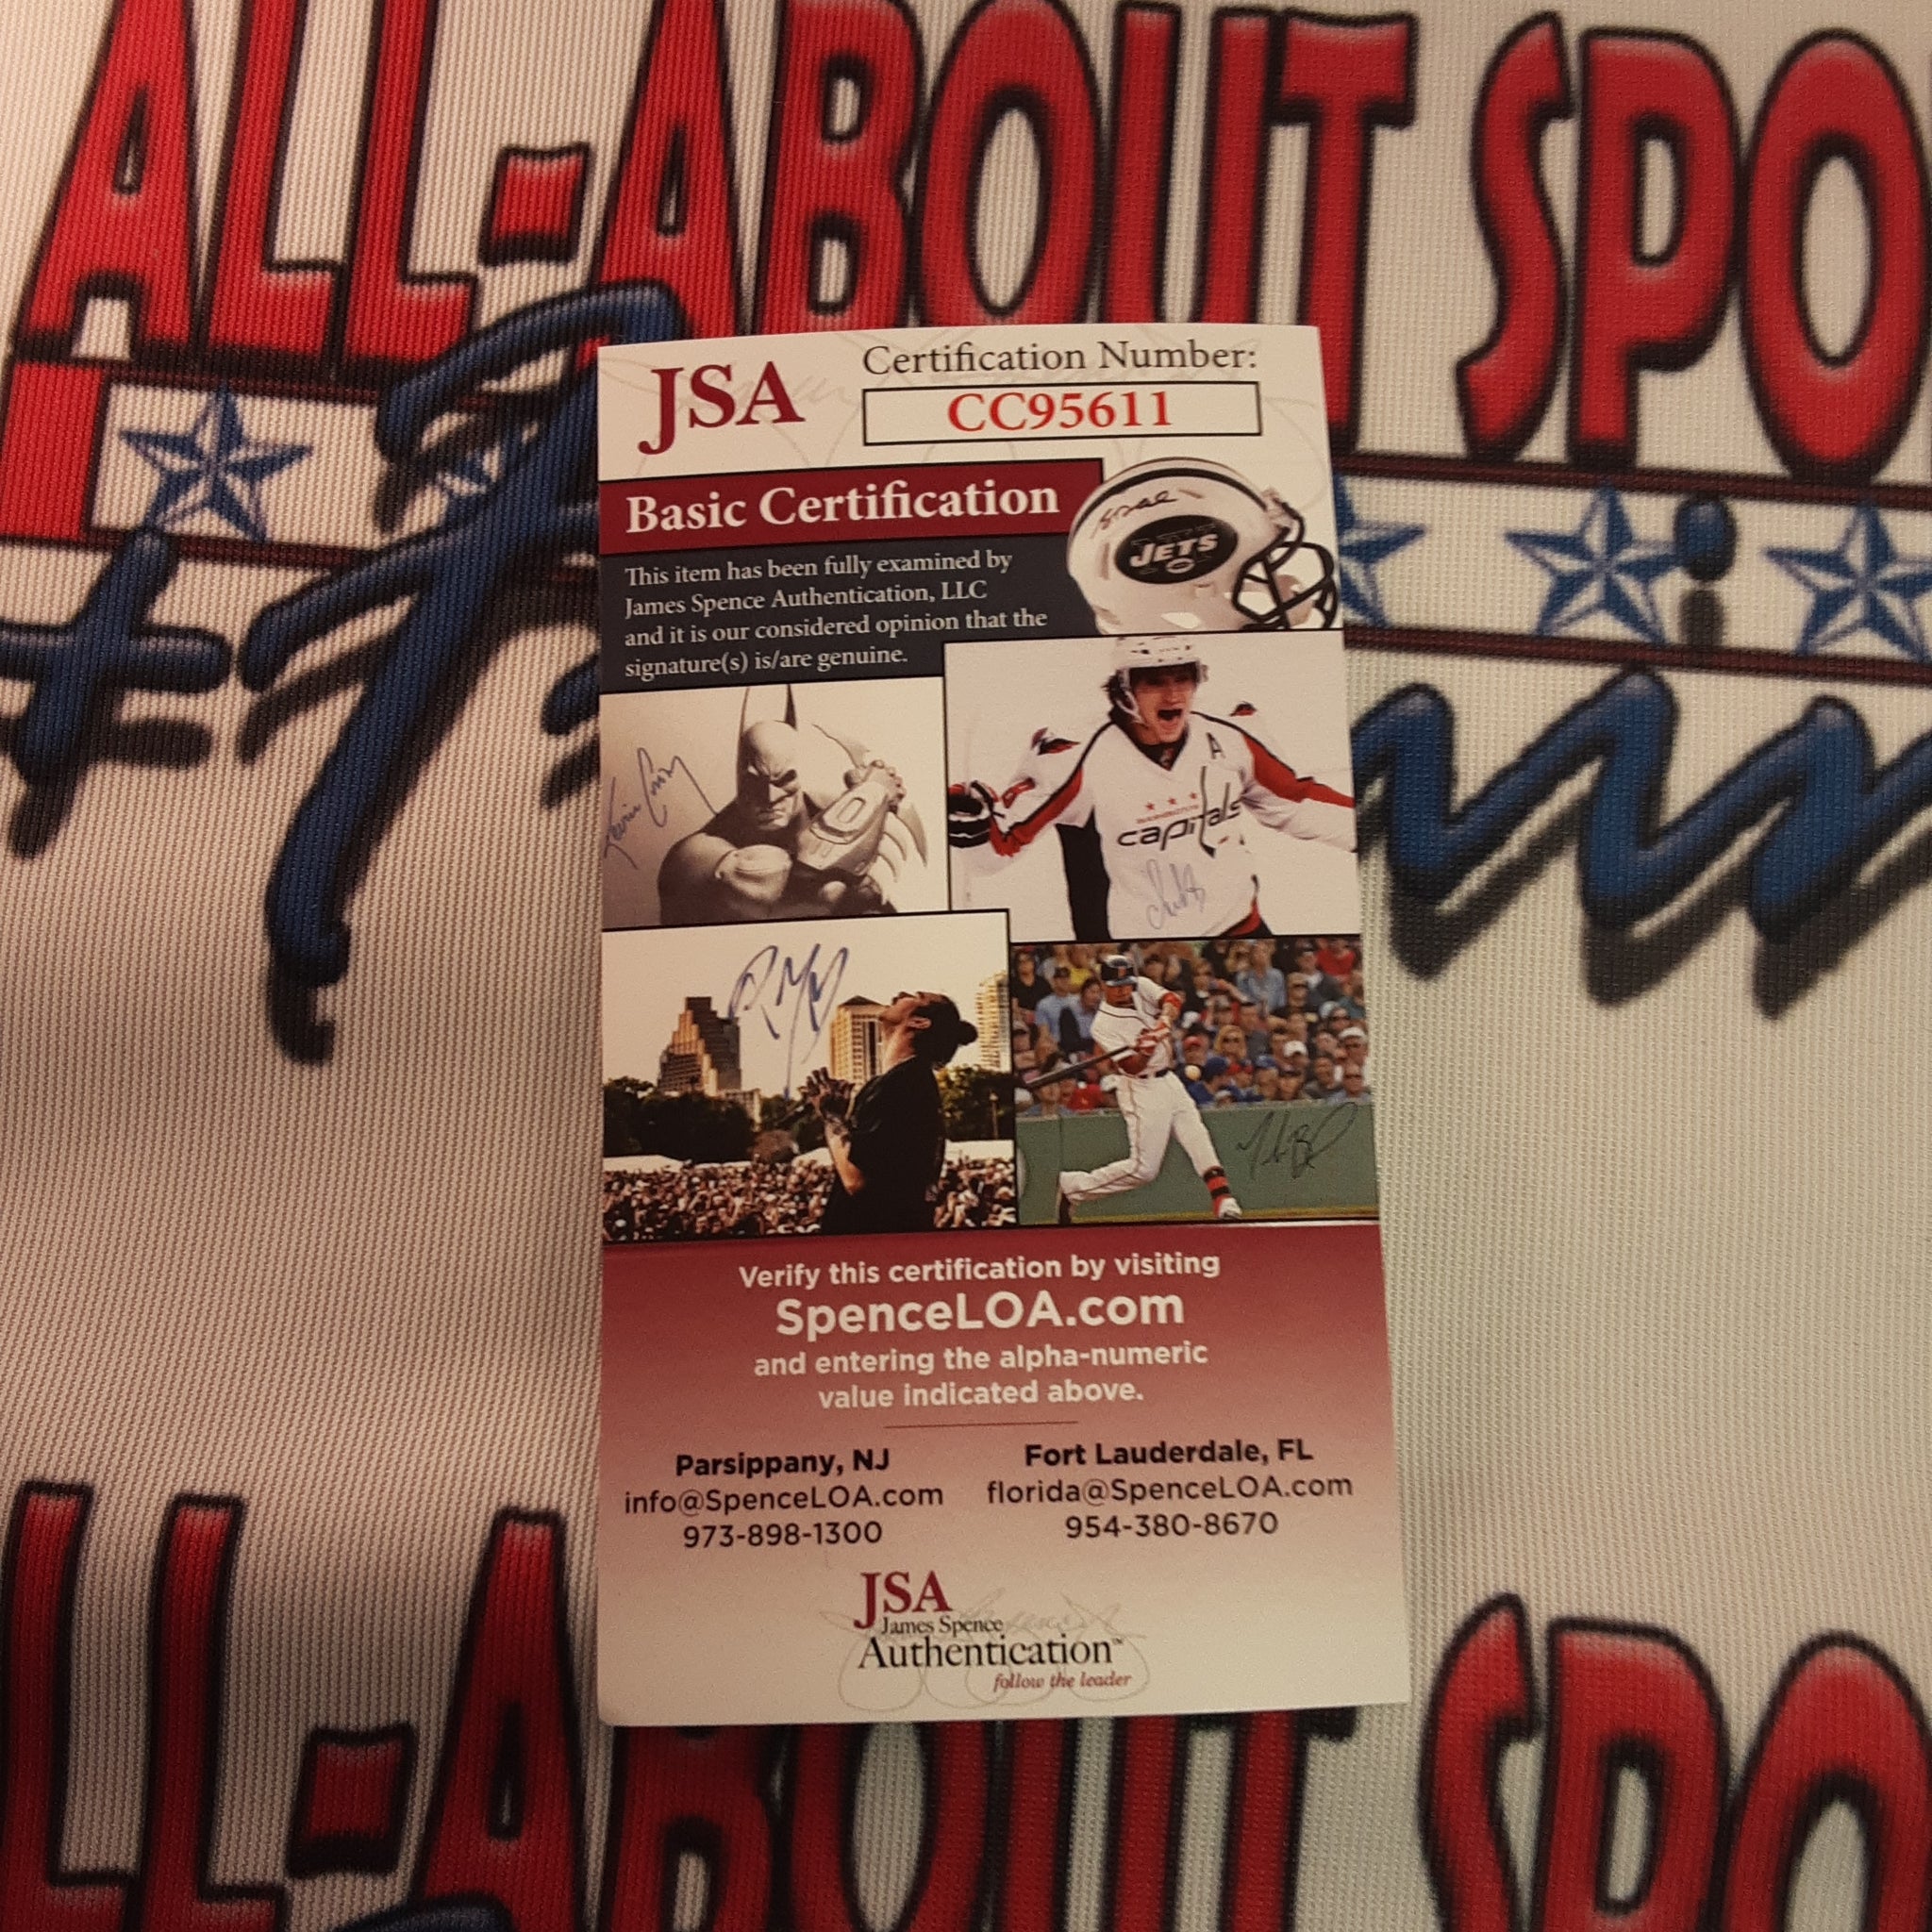 Larry Johnson & Muggsy Bouges Authentic Signed Basketball Autographed JSA